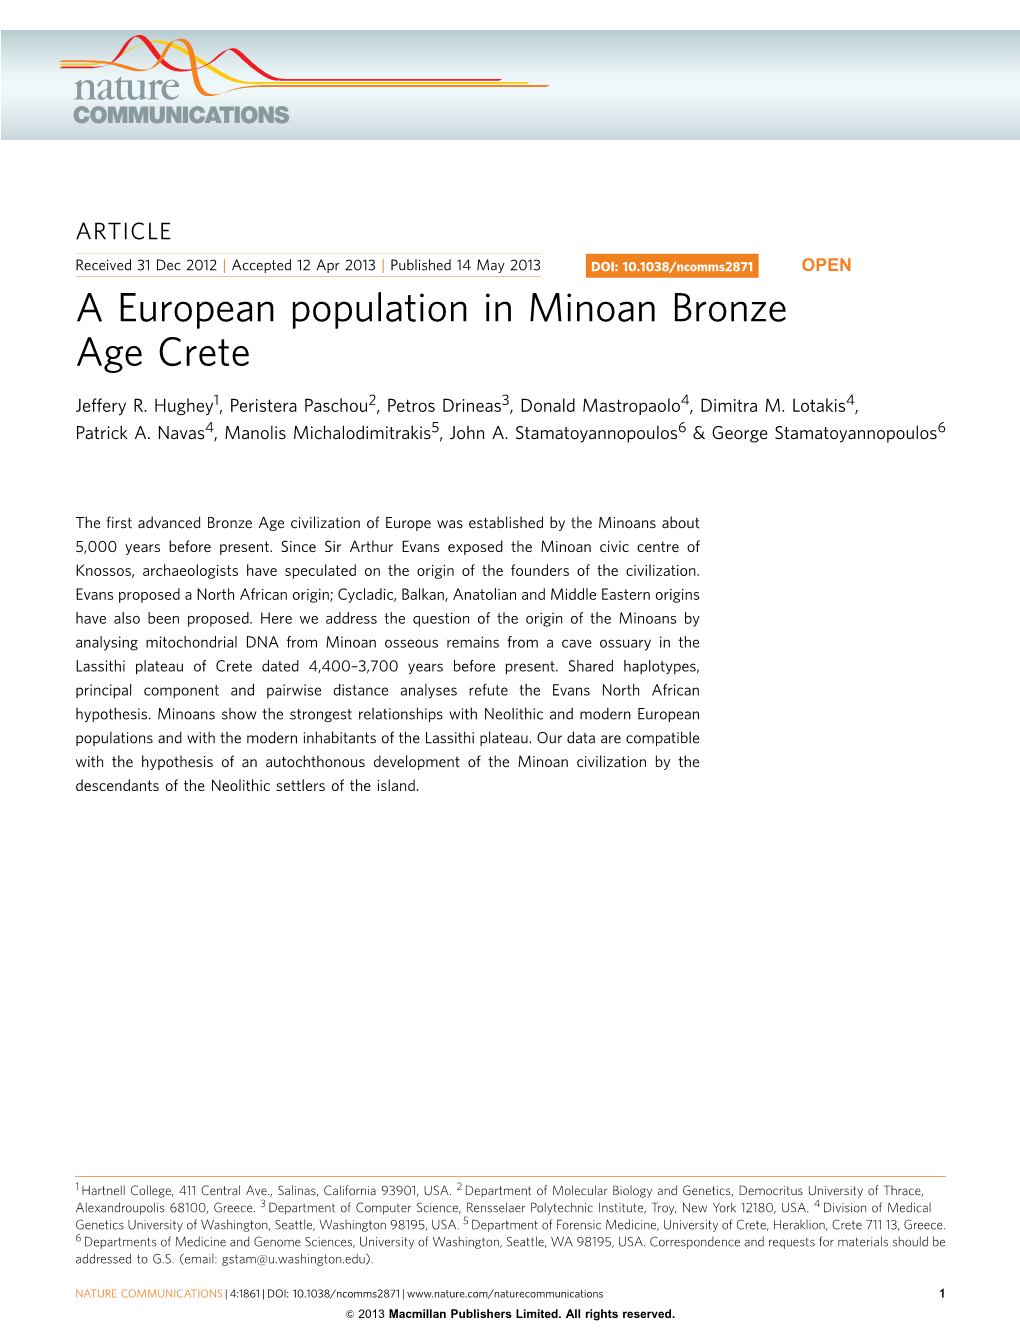 A European Population in Minoan Bronze Age Crete